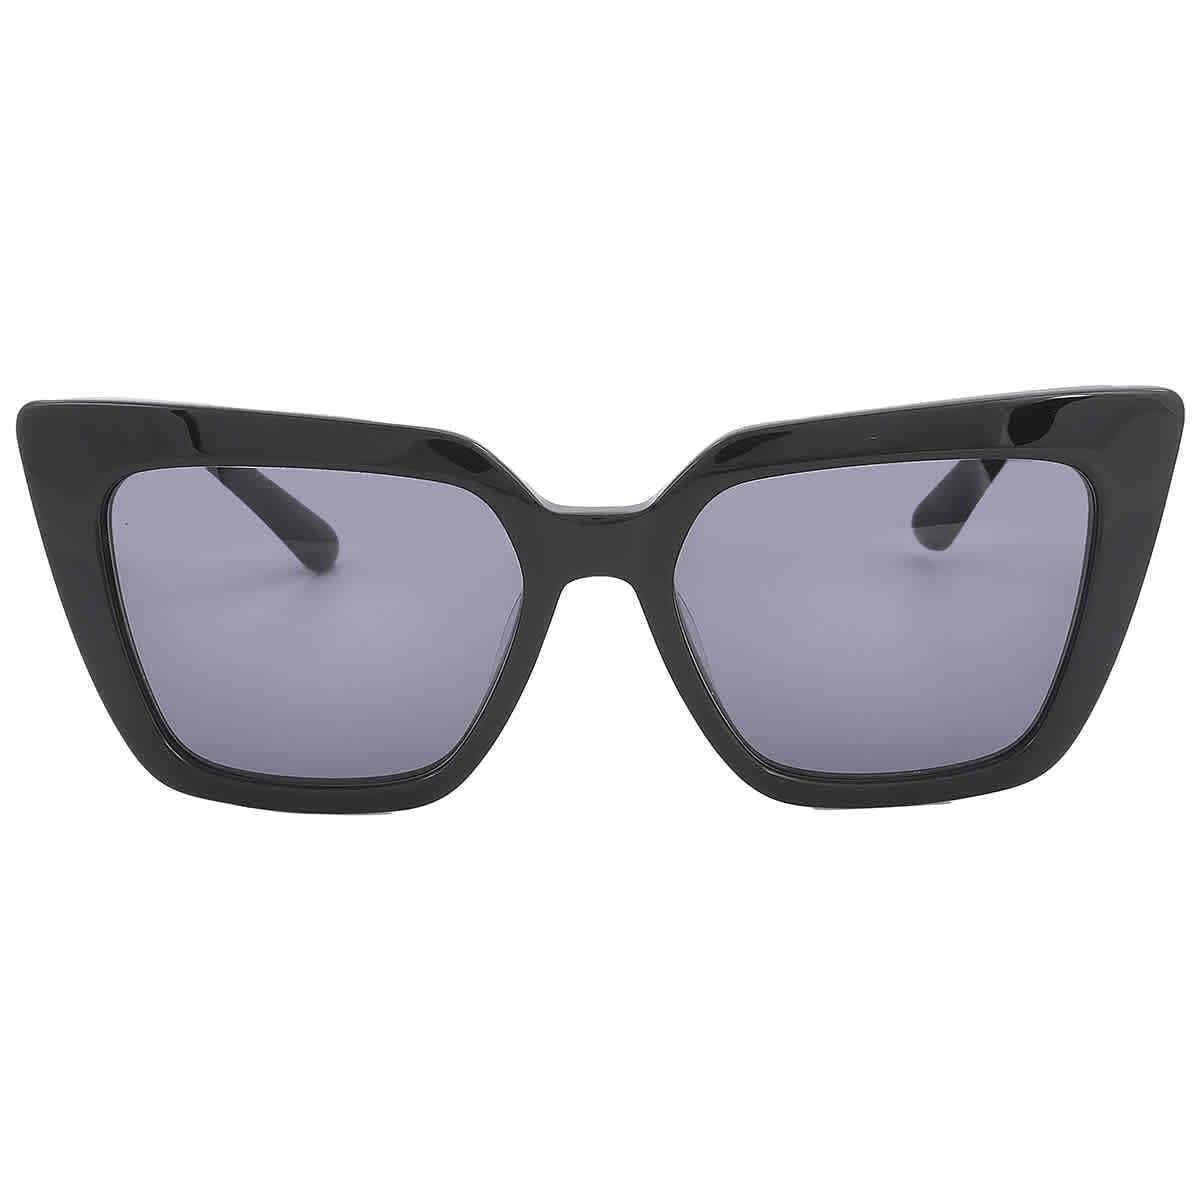 Calvin Klein CK22516S-001-5417 54mm New Sunglasses